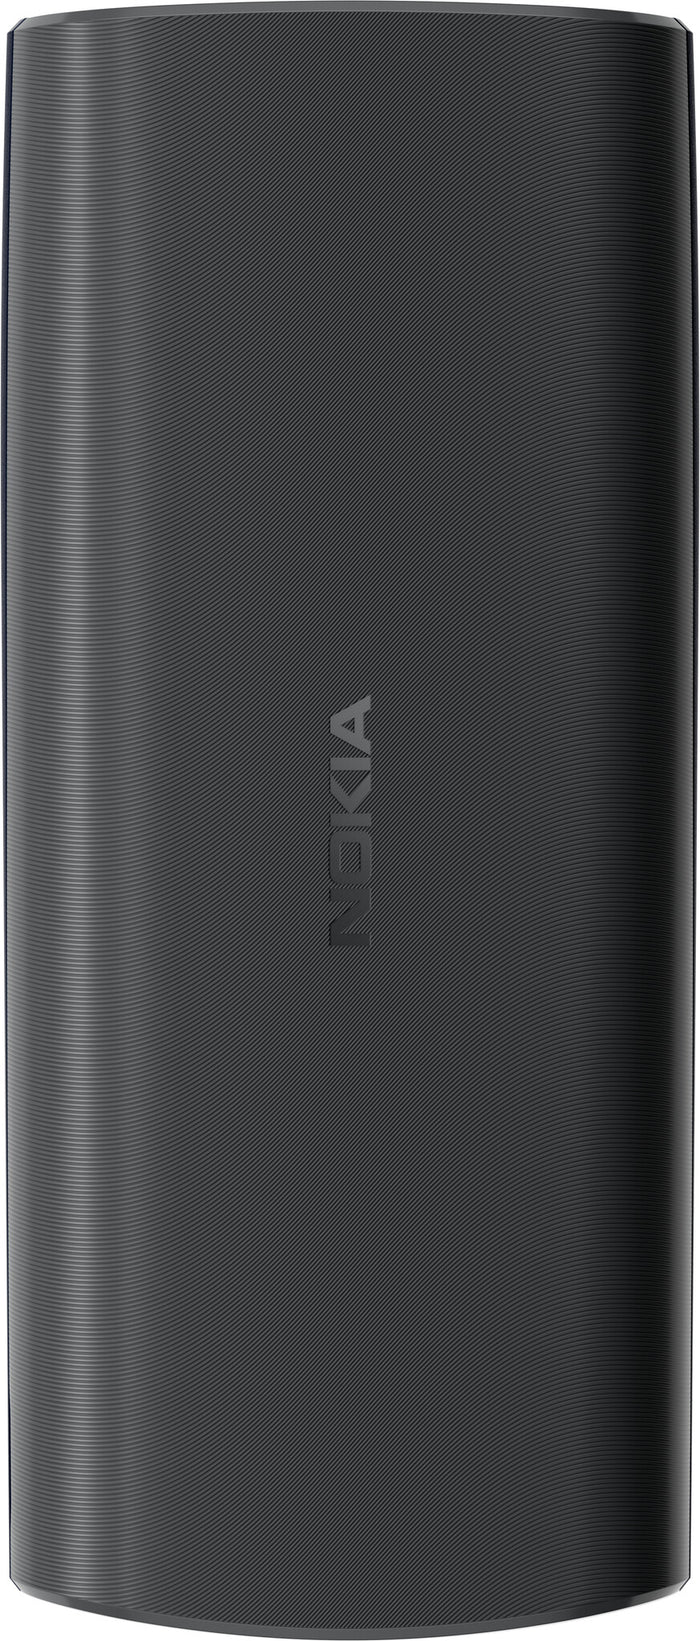 Nokia 105 4.57 cm (1.8) 78.7 g Charcoal Feature phone Nokia